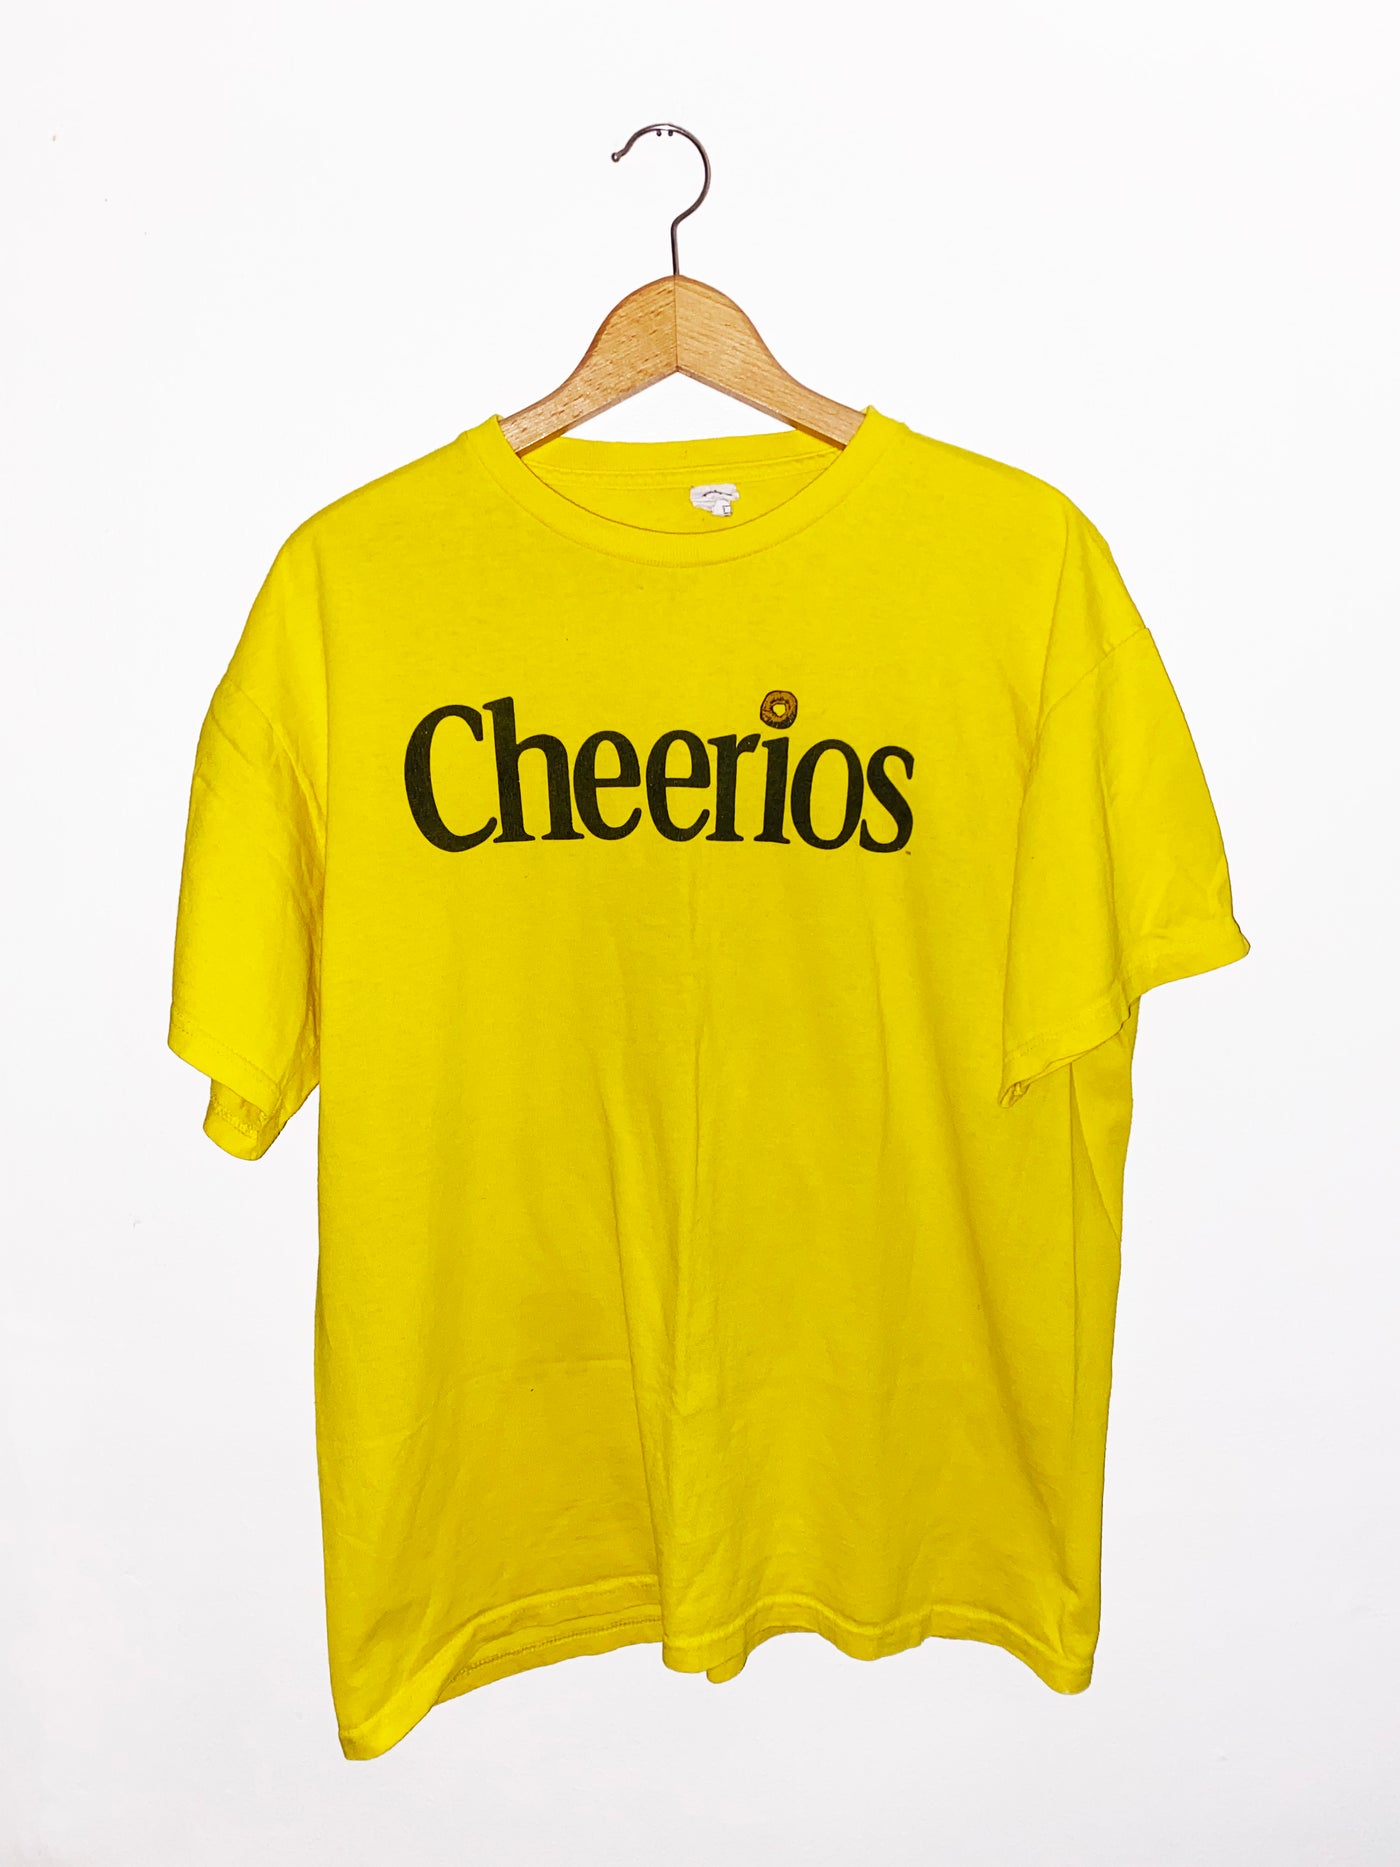 Vintage Cheerios Promo T-Shirt on Delta Tag